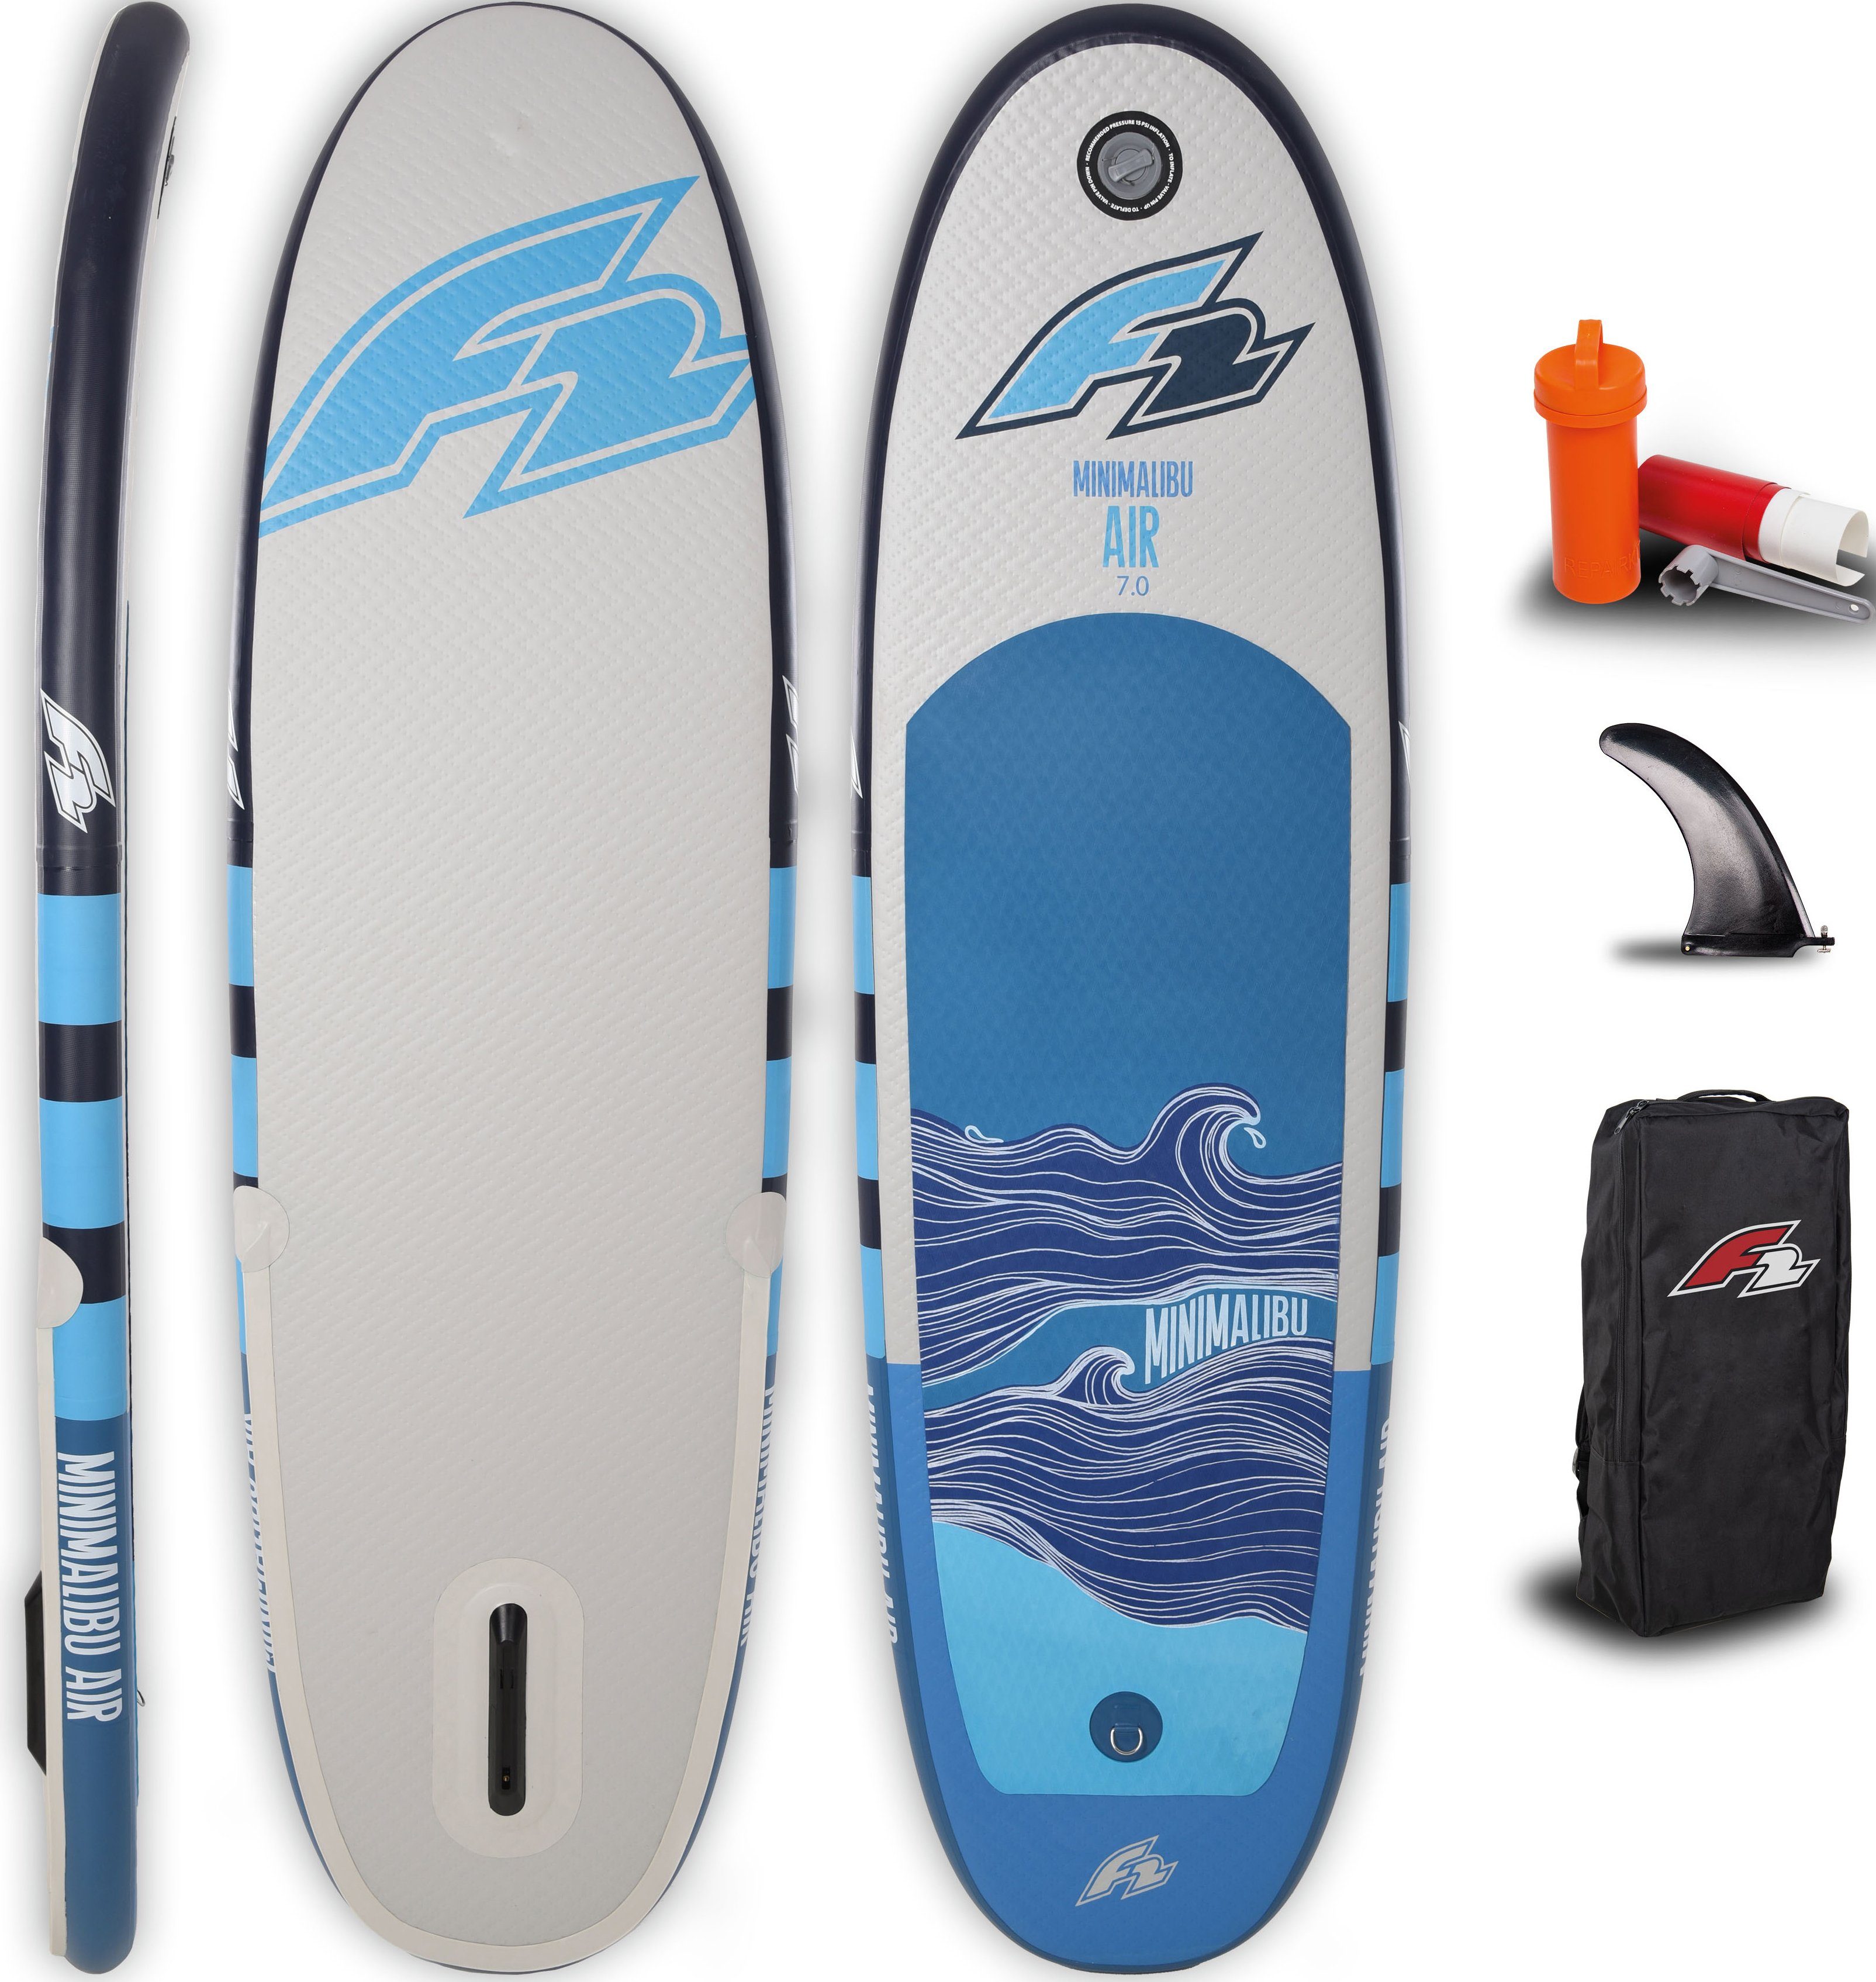 tlg) F2 SUP-Board F2 (Set, 6 Air, Mini Malibu Inflatable